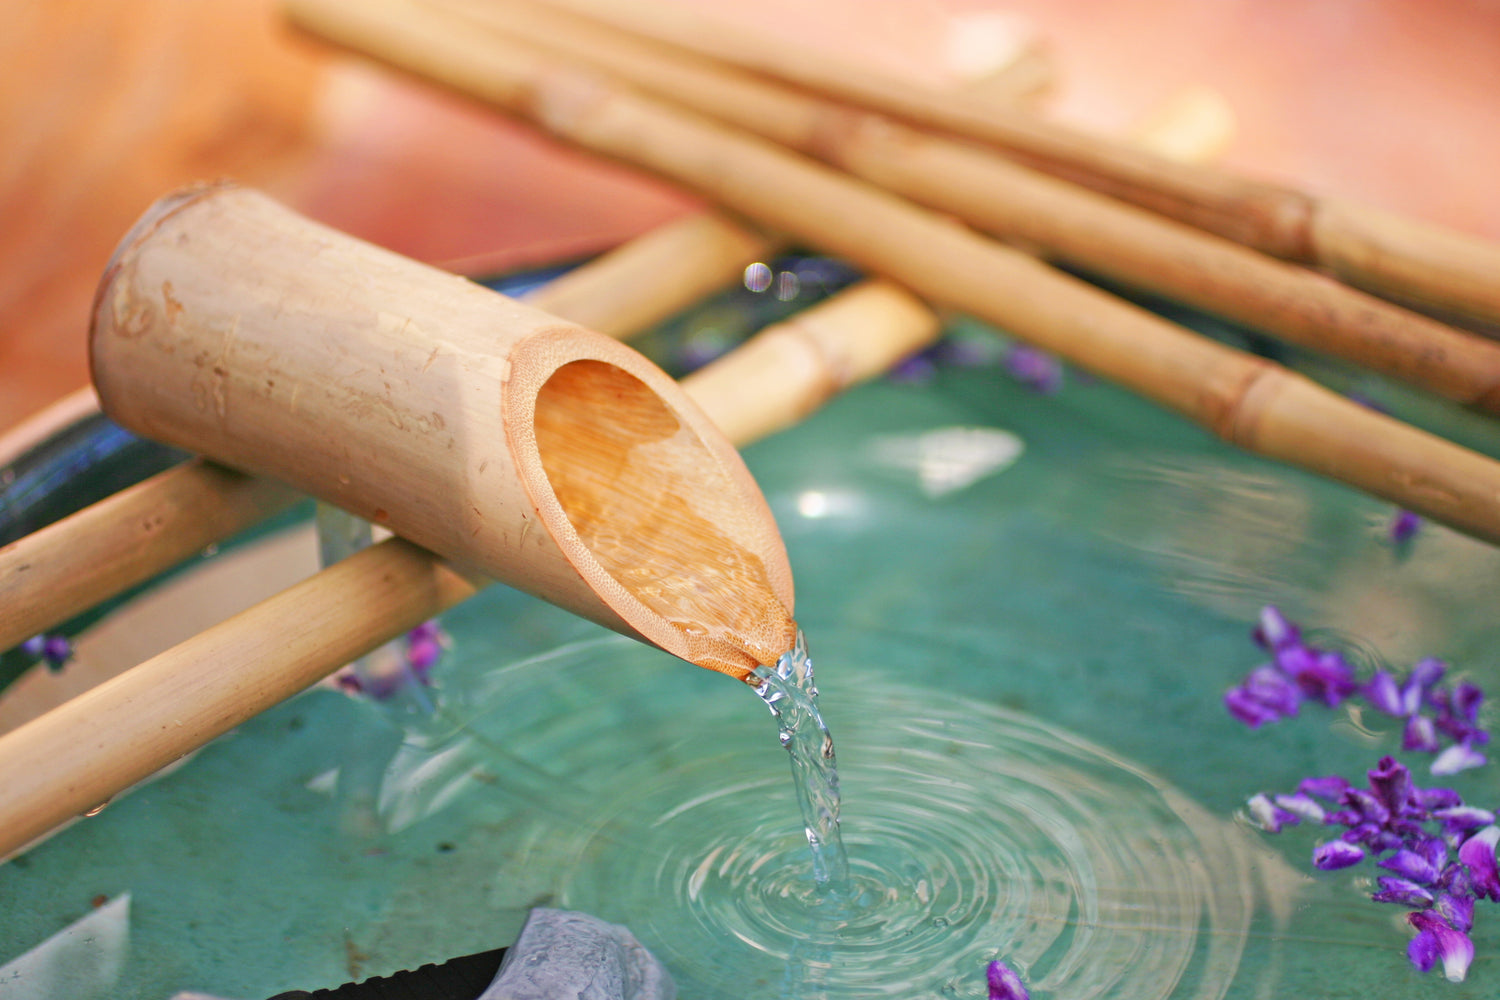 bamboo water fountain